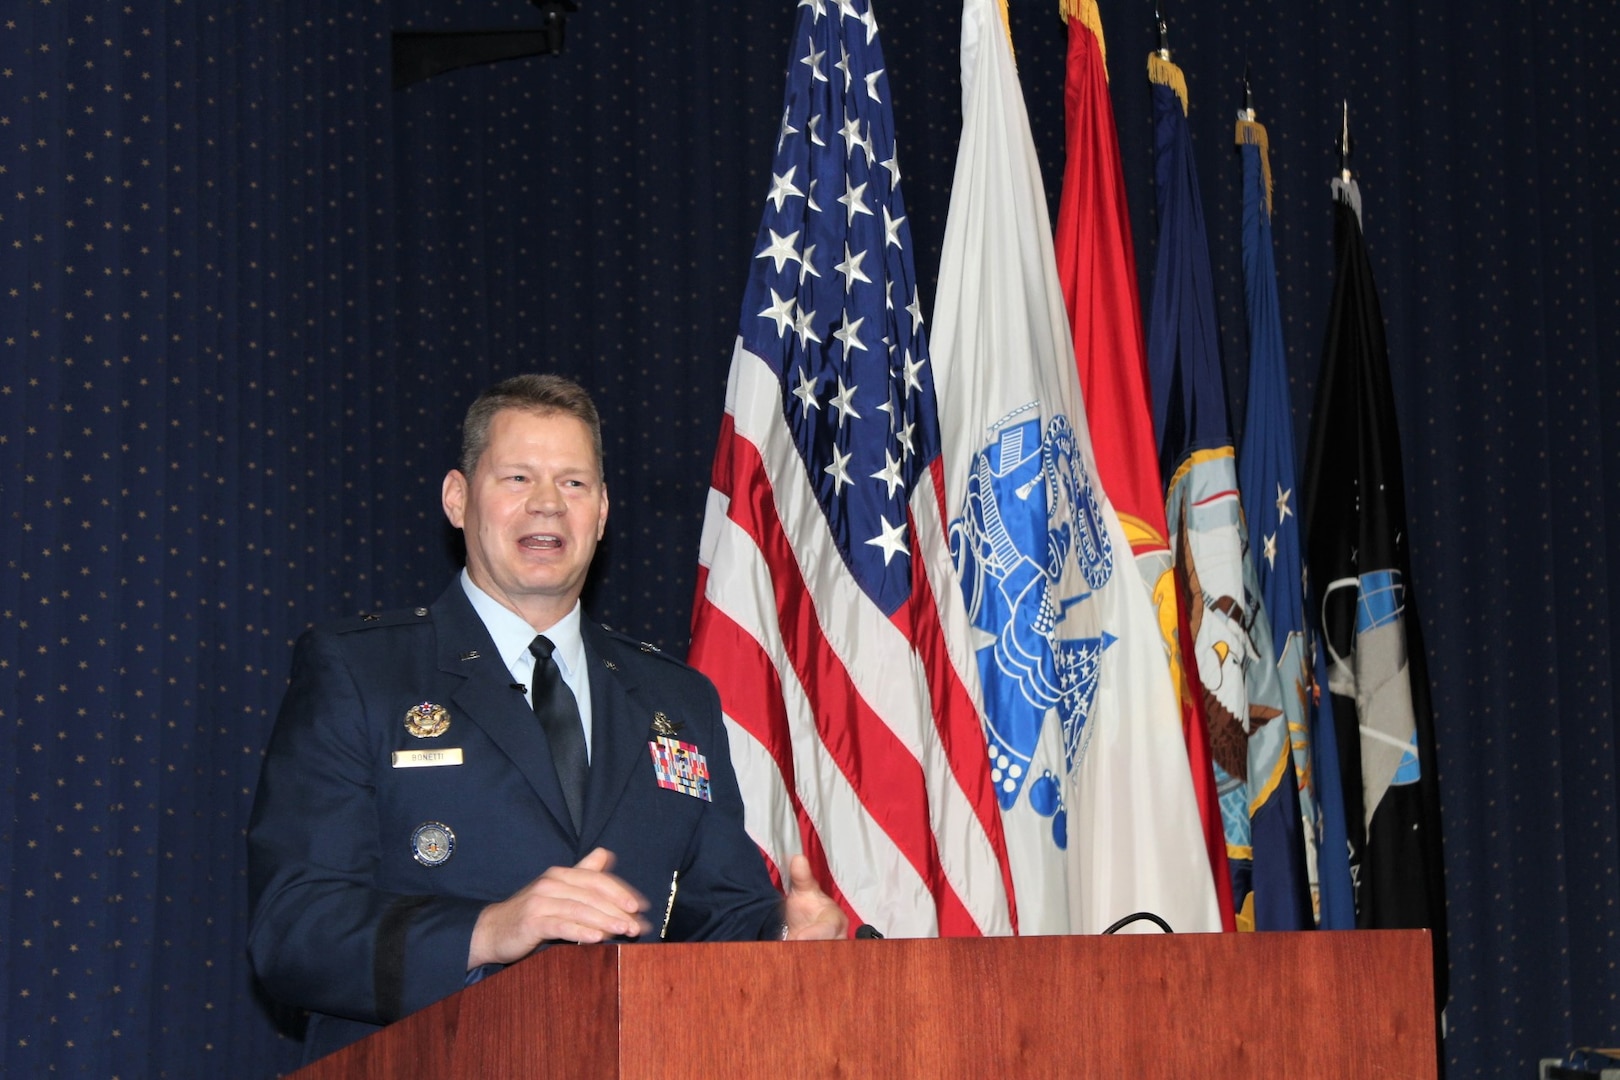 Air Force airman speaks at a podium